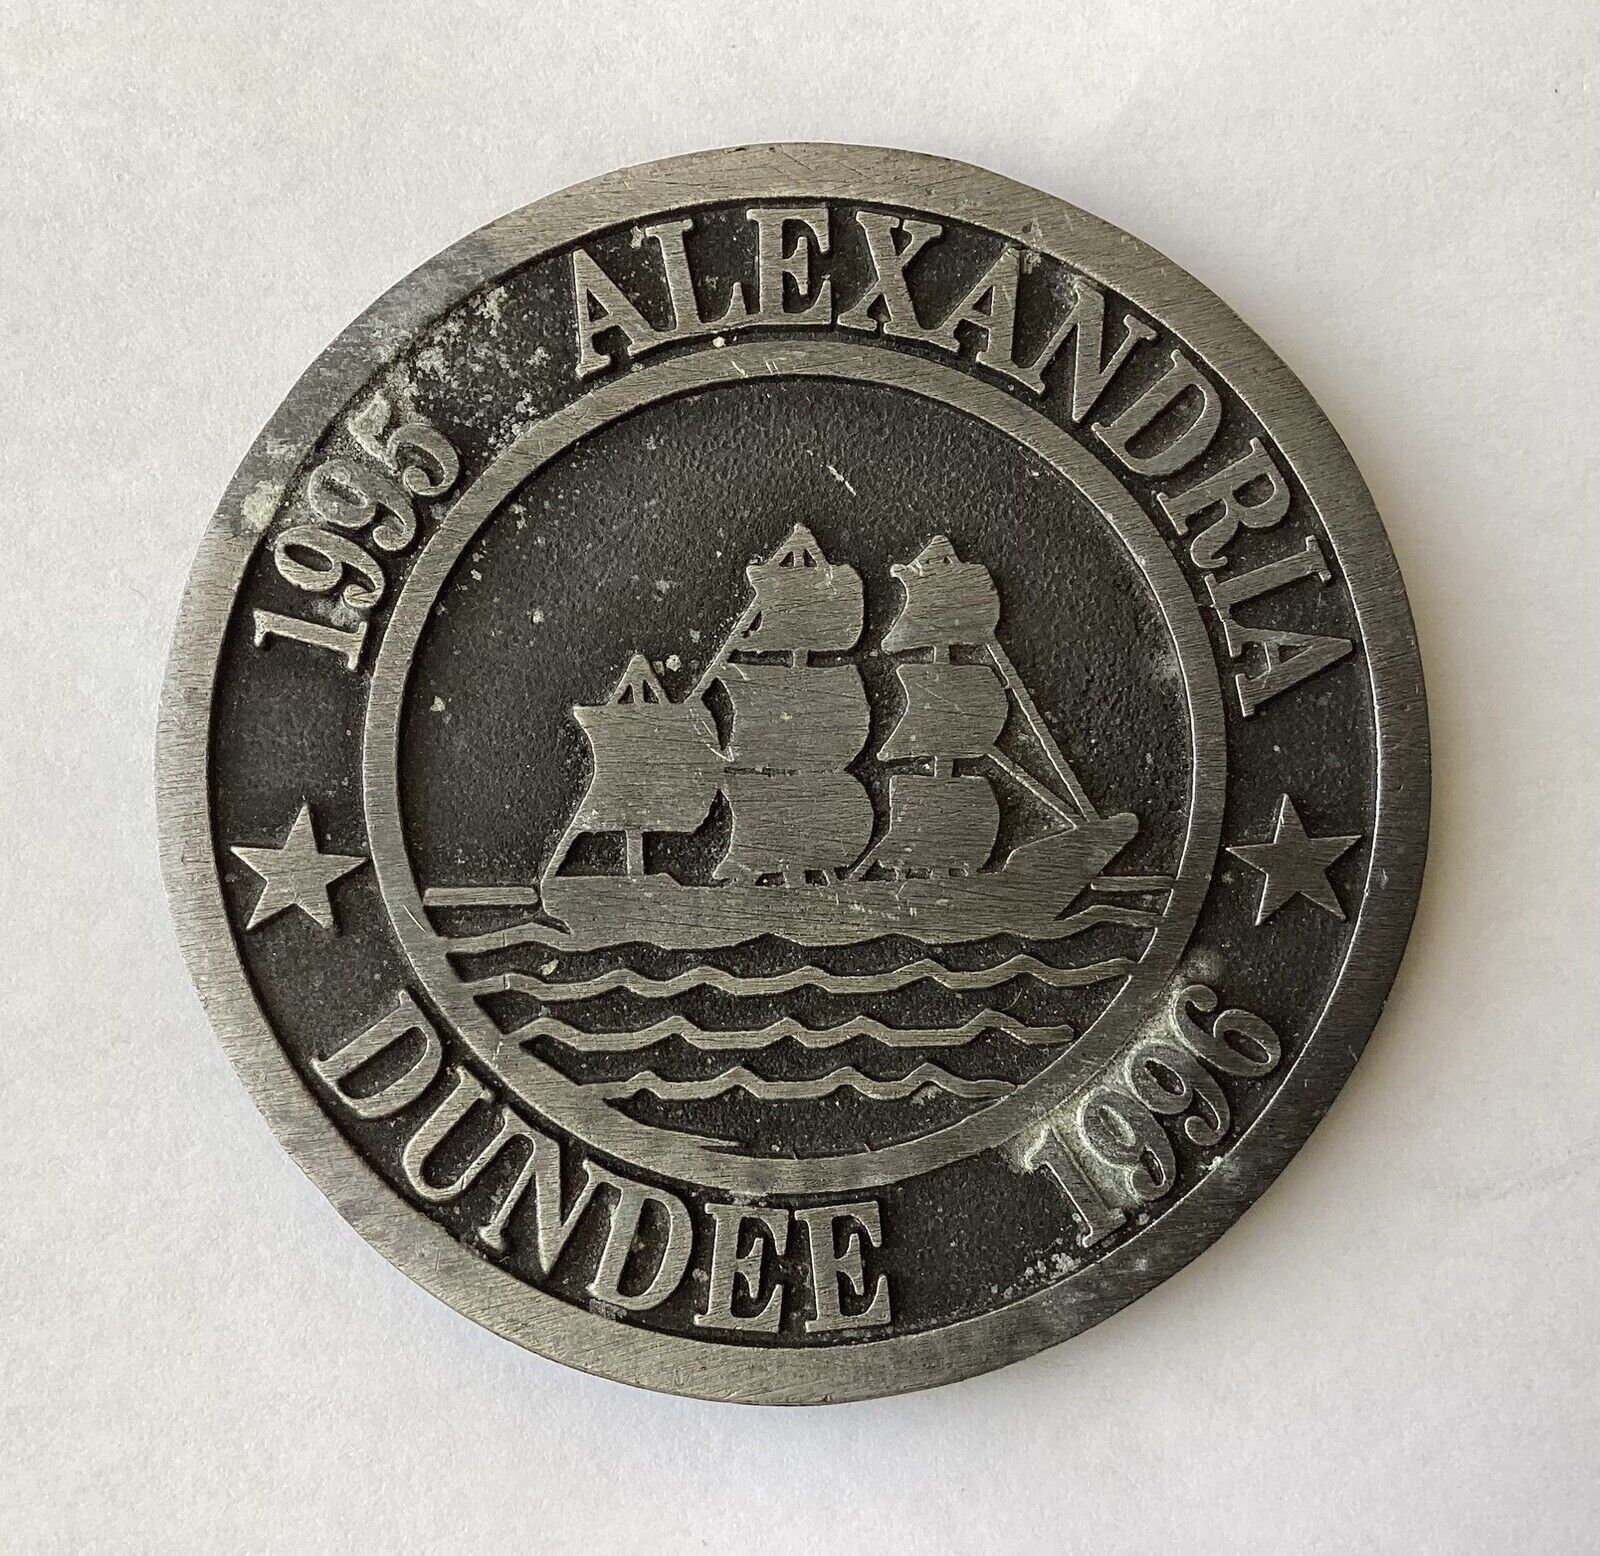 Vintage 1995 Alexandria 1996 Dundee Metal Coaster